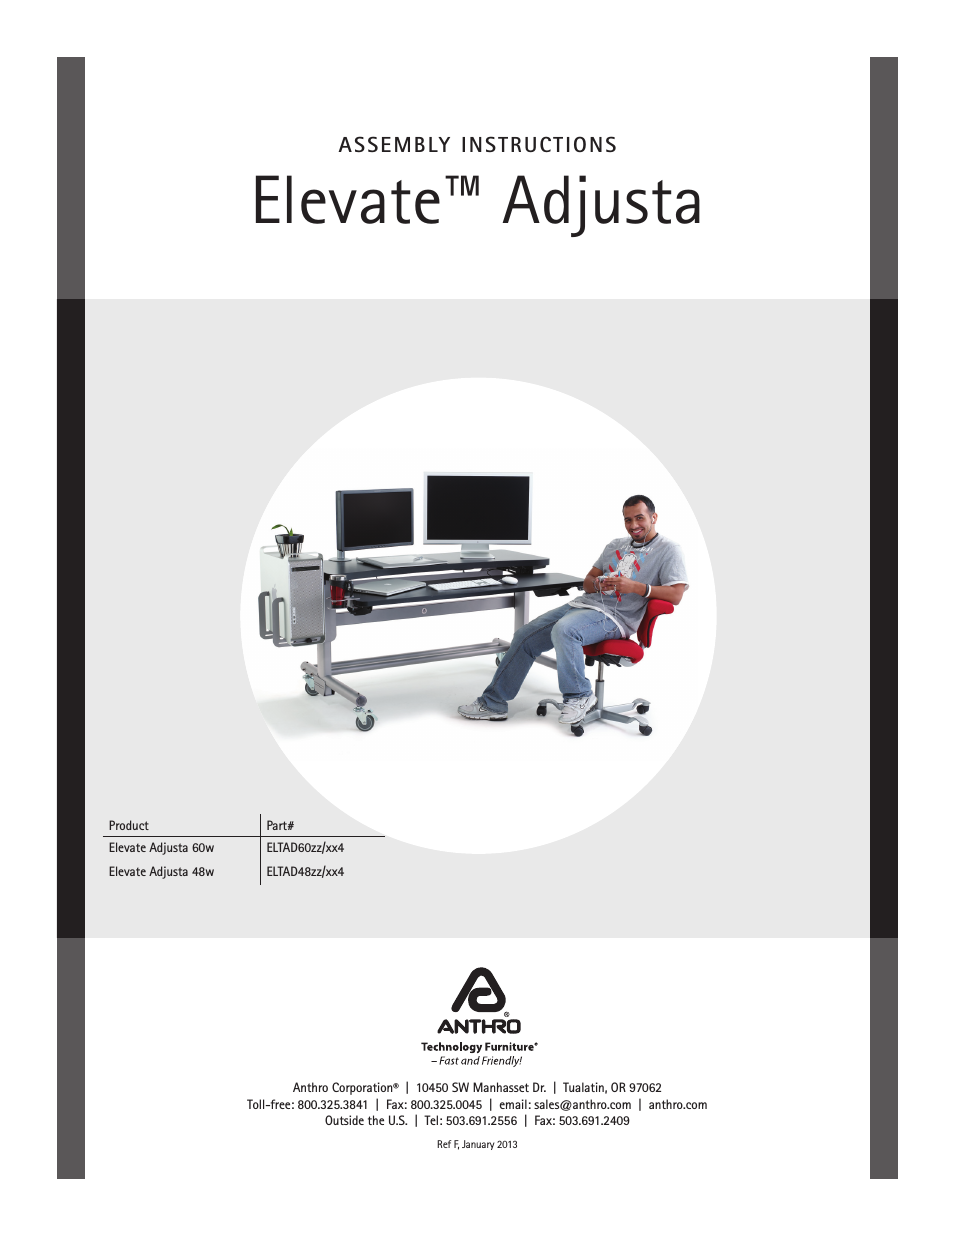 Elevate Original Adjusta Assembly Instructions